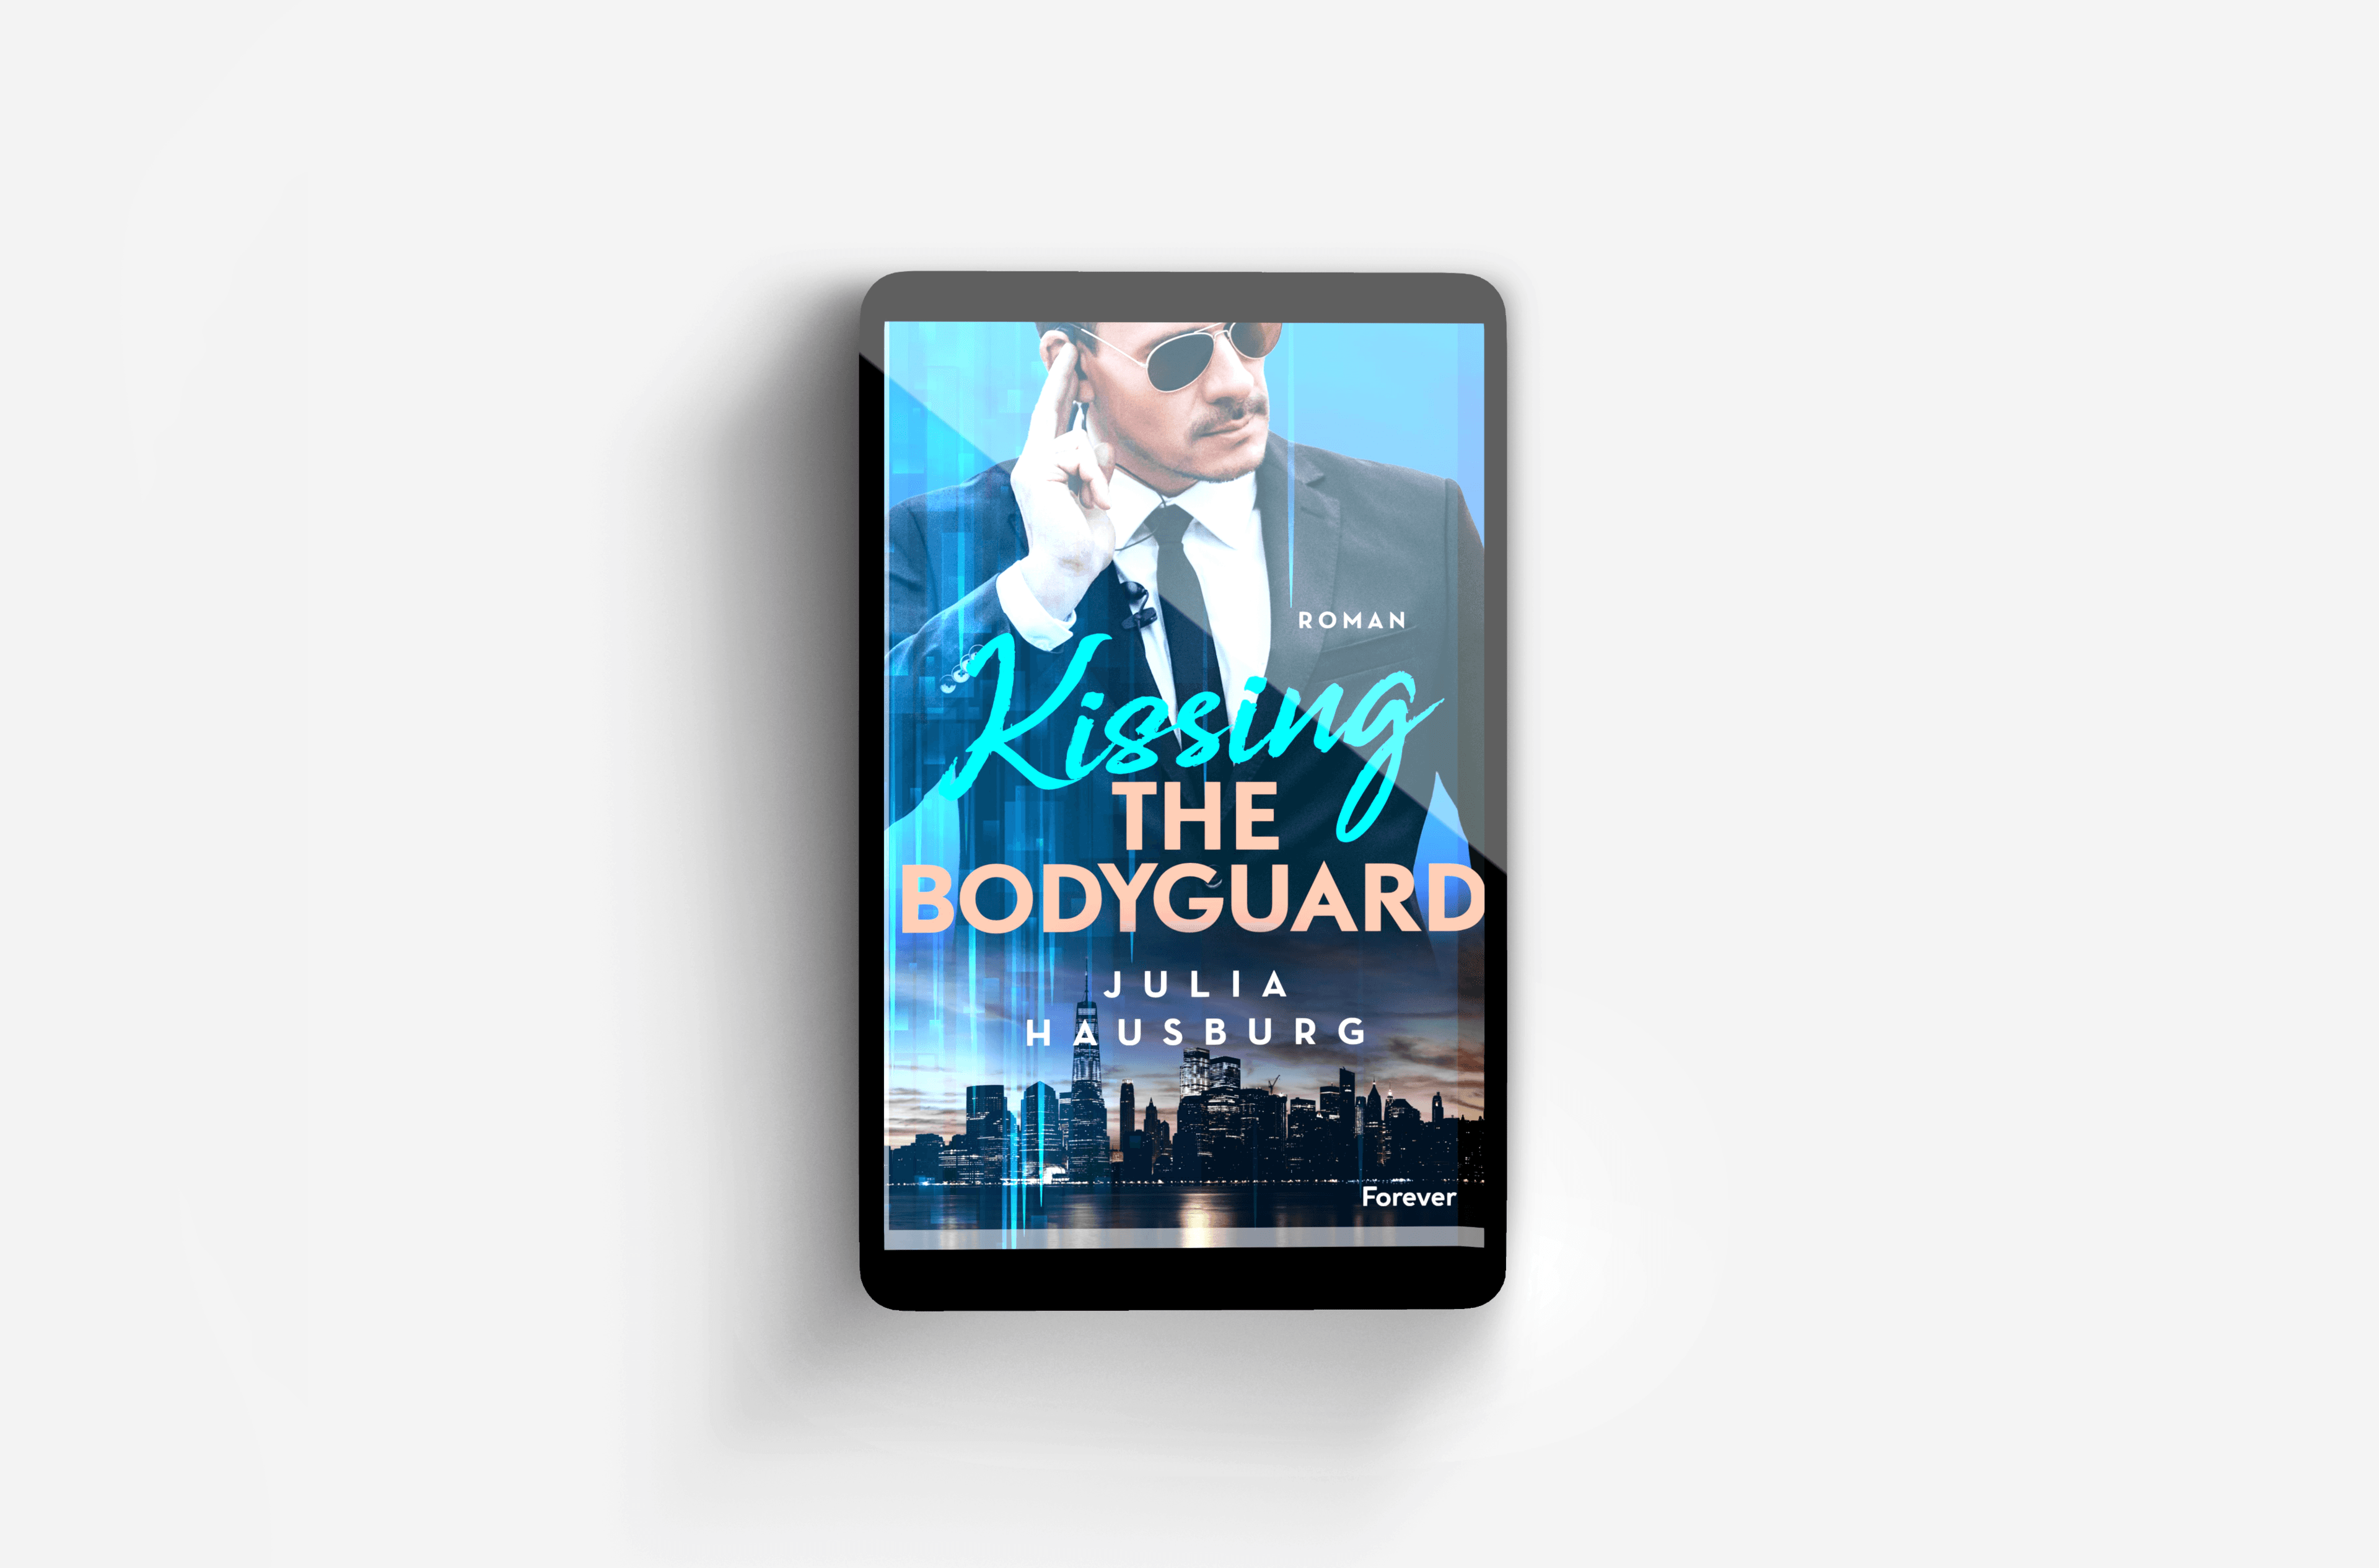 Buchcover von Kissing the Bodyguard